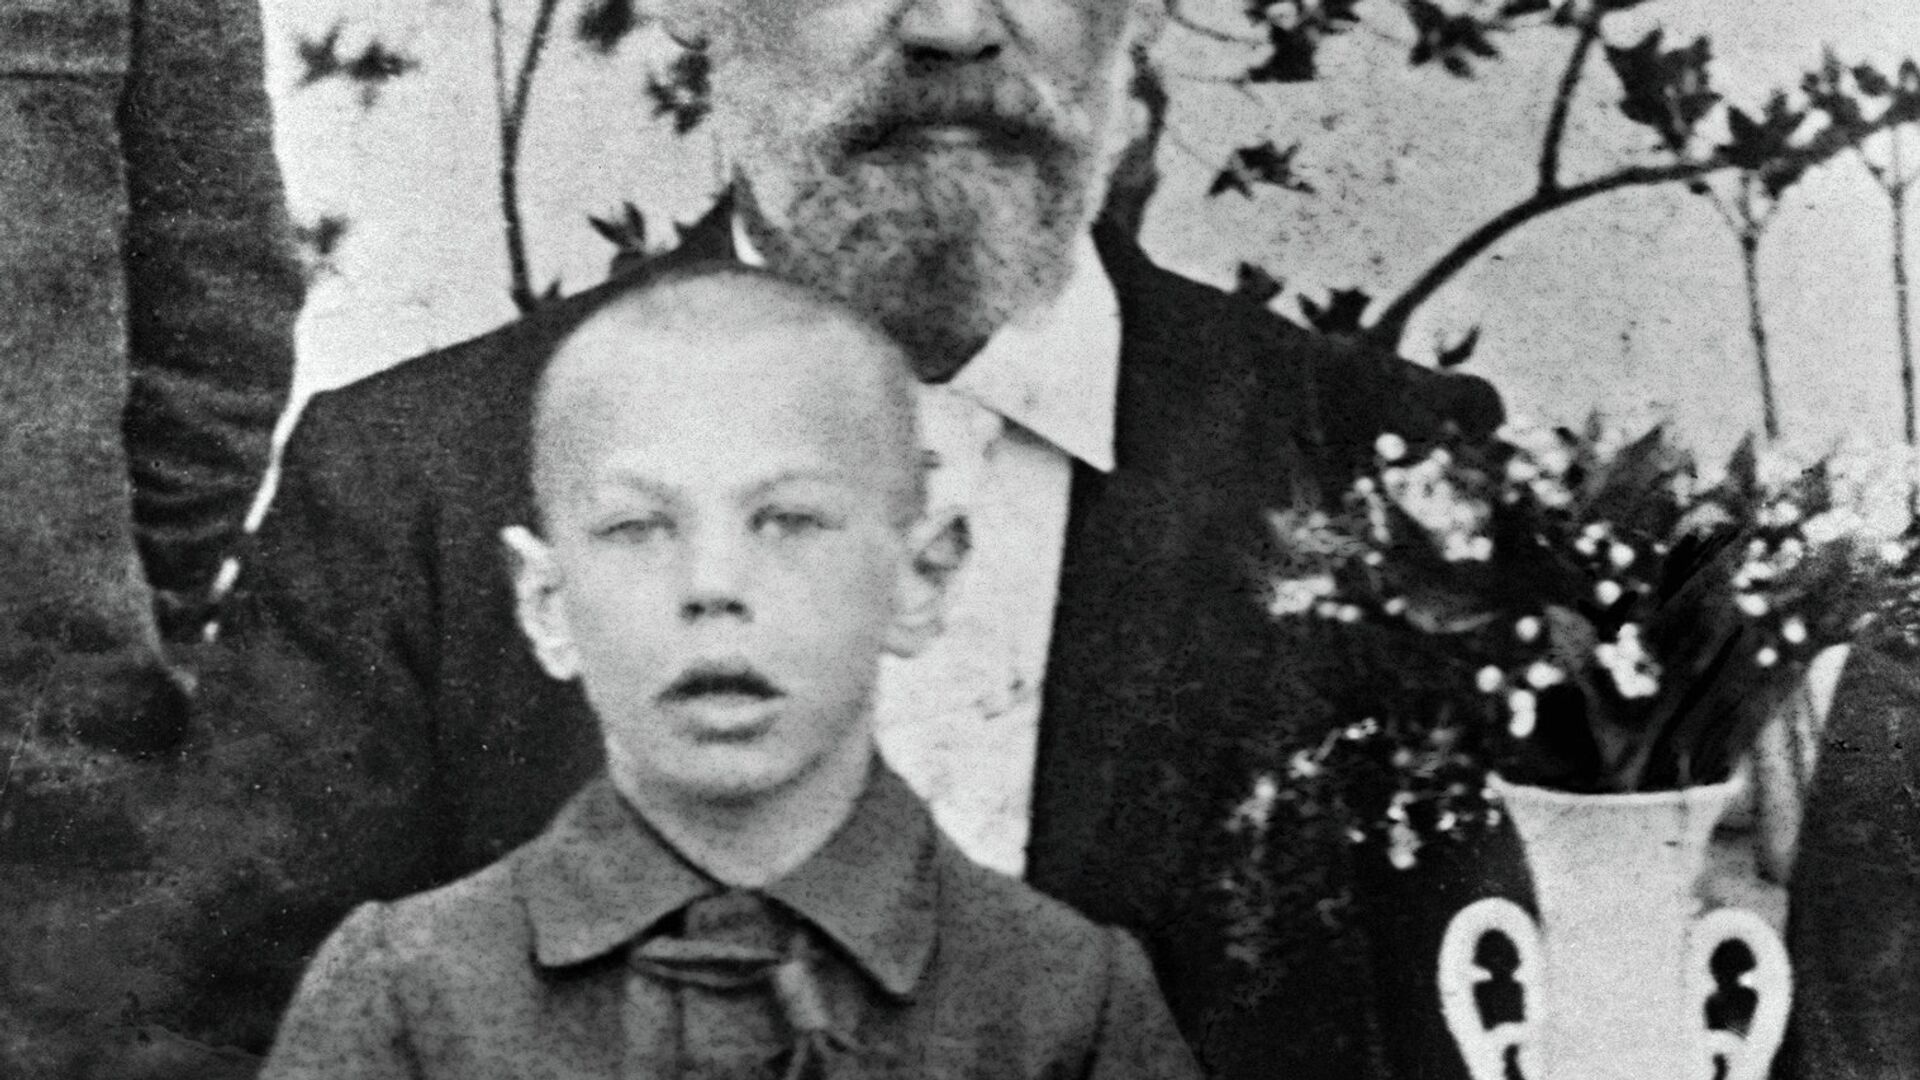 Восьмилетний Рихард Зорге с отцом на фото из семейного архива - РИА Новости, 1920, 04.10.2015